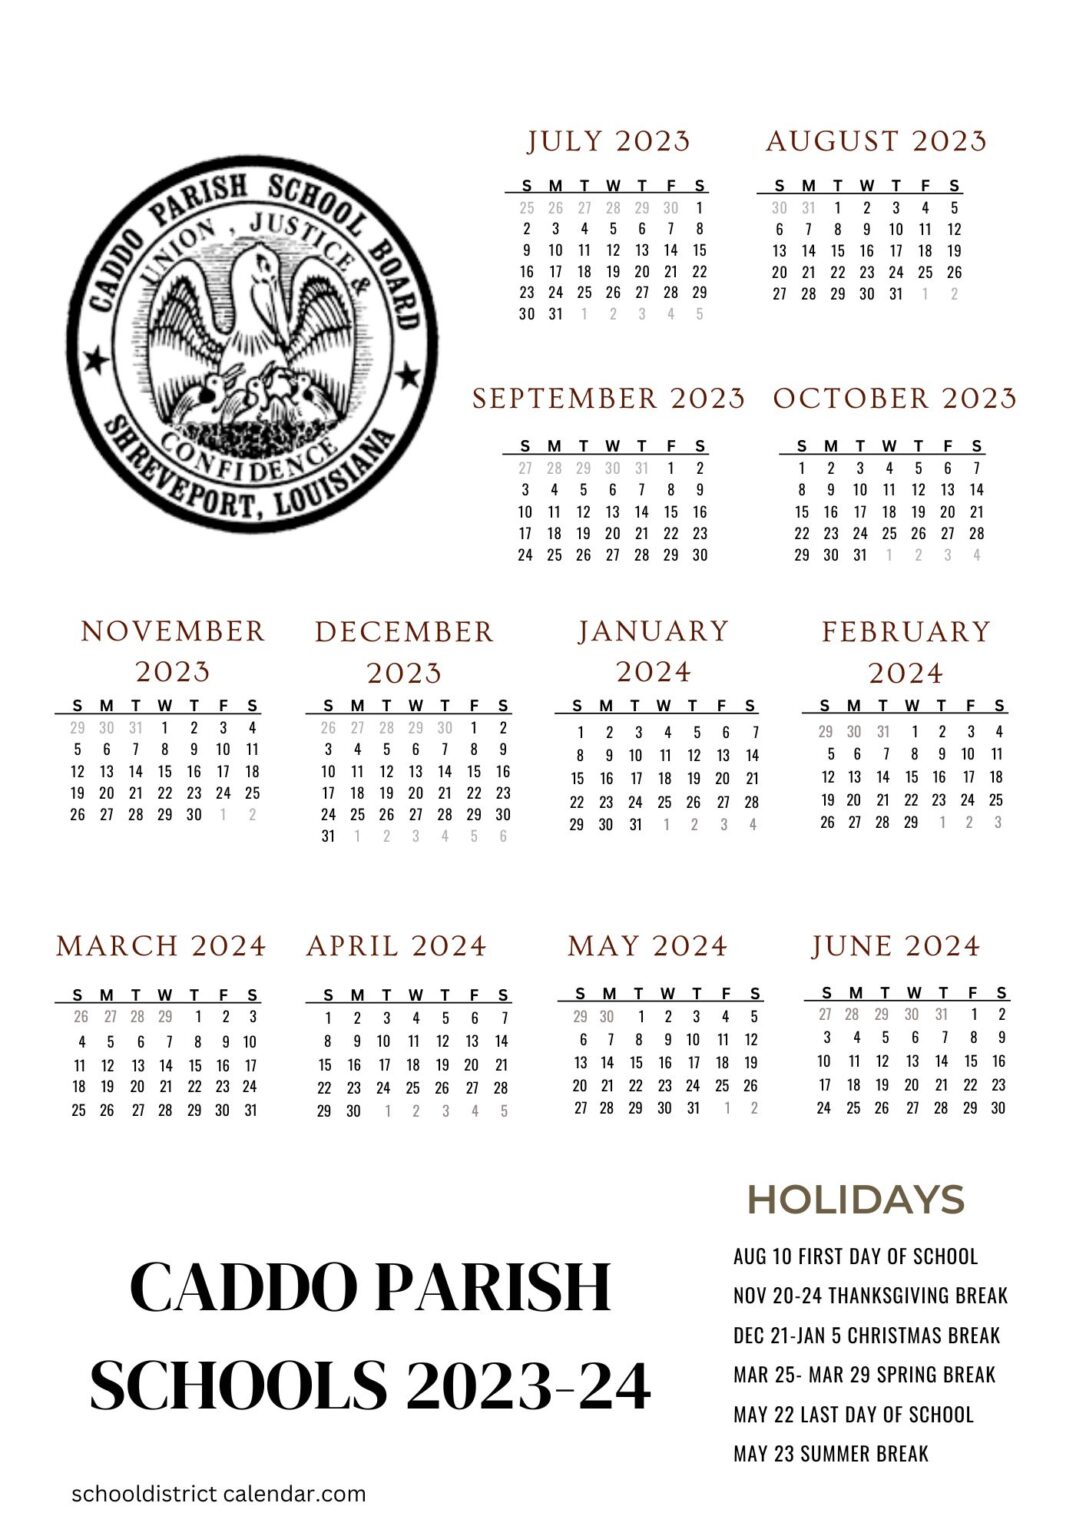 Caddo Parish Schools Calendar Holidays 2023 2024